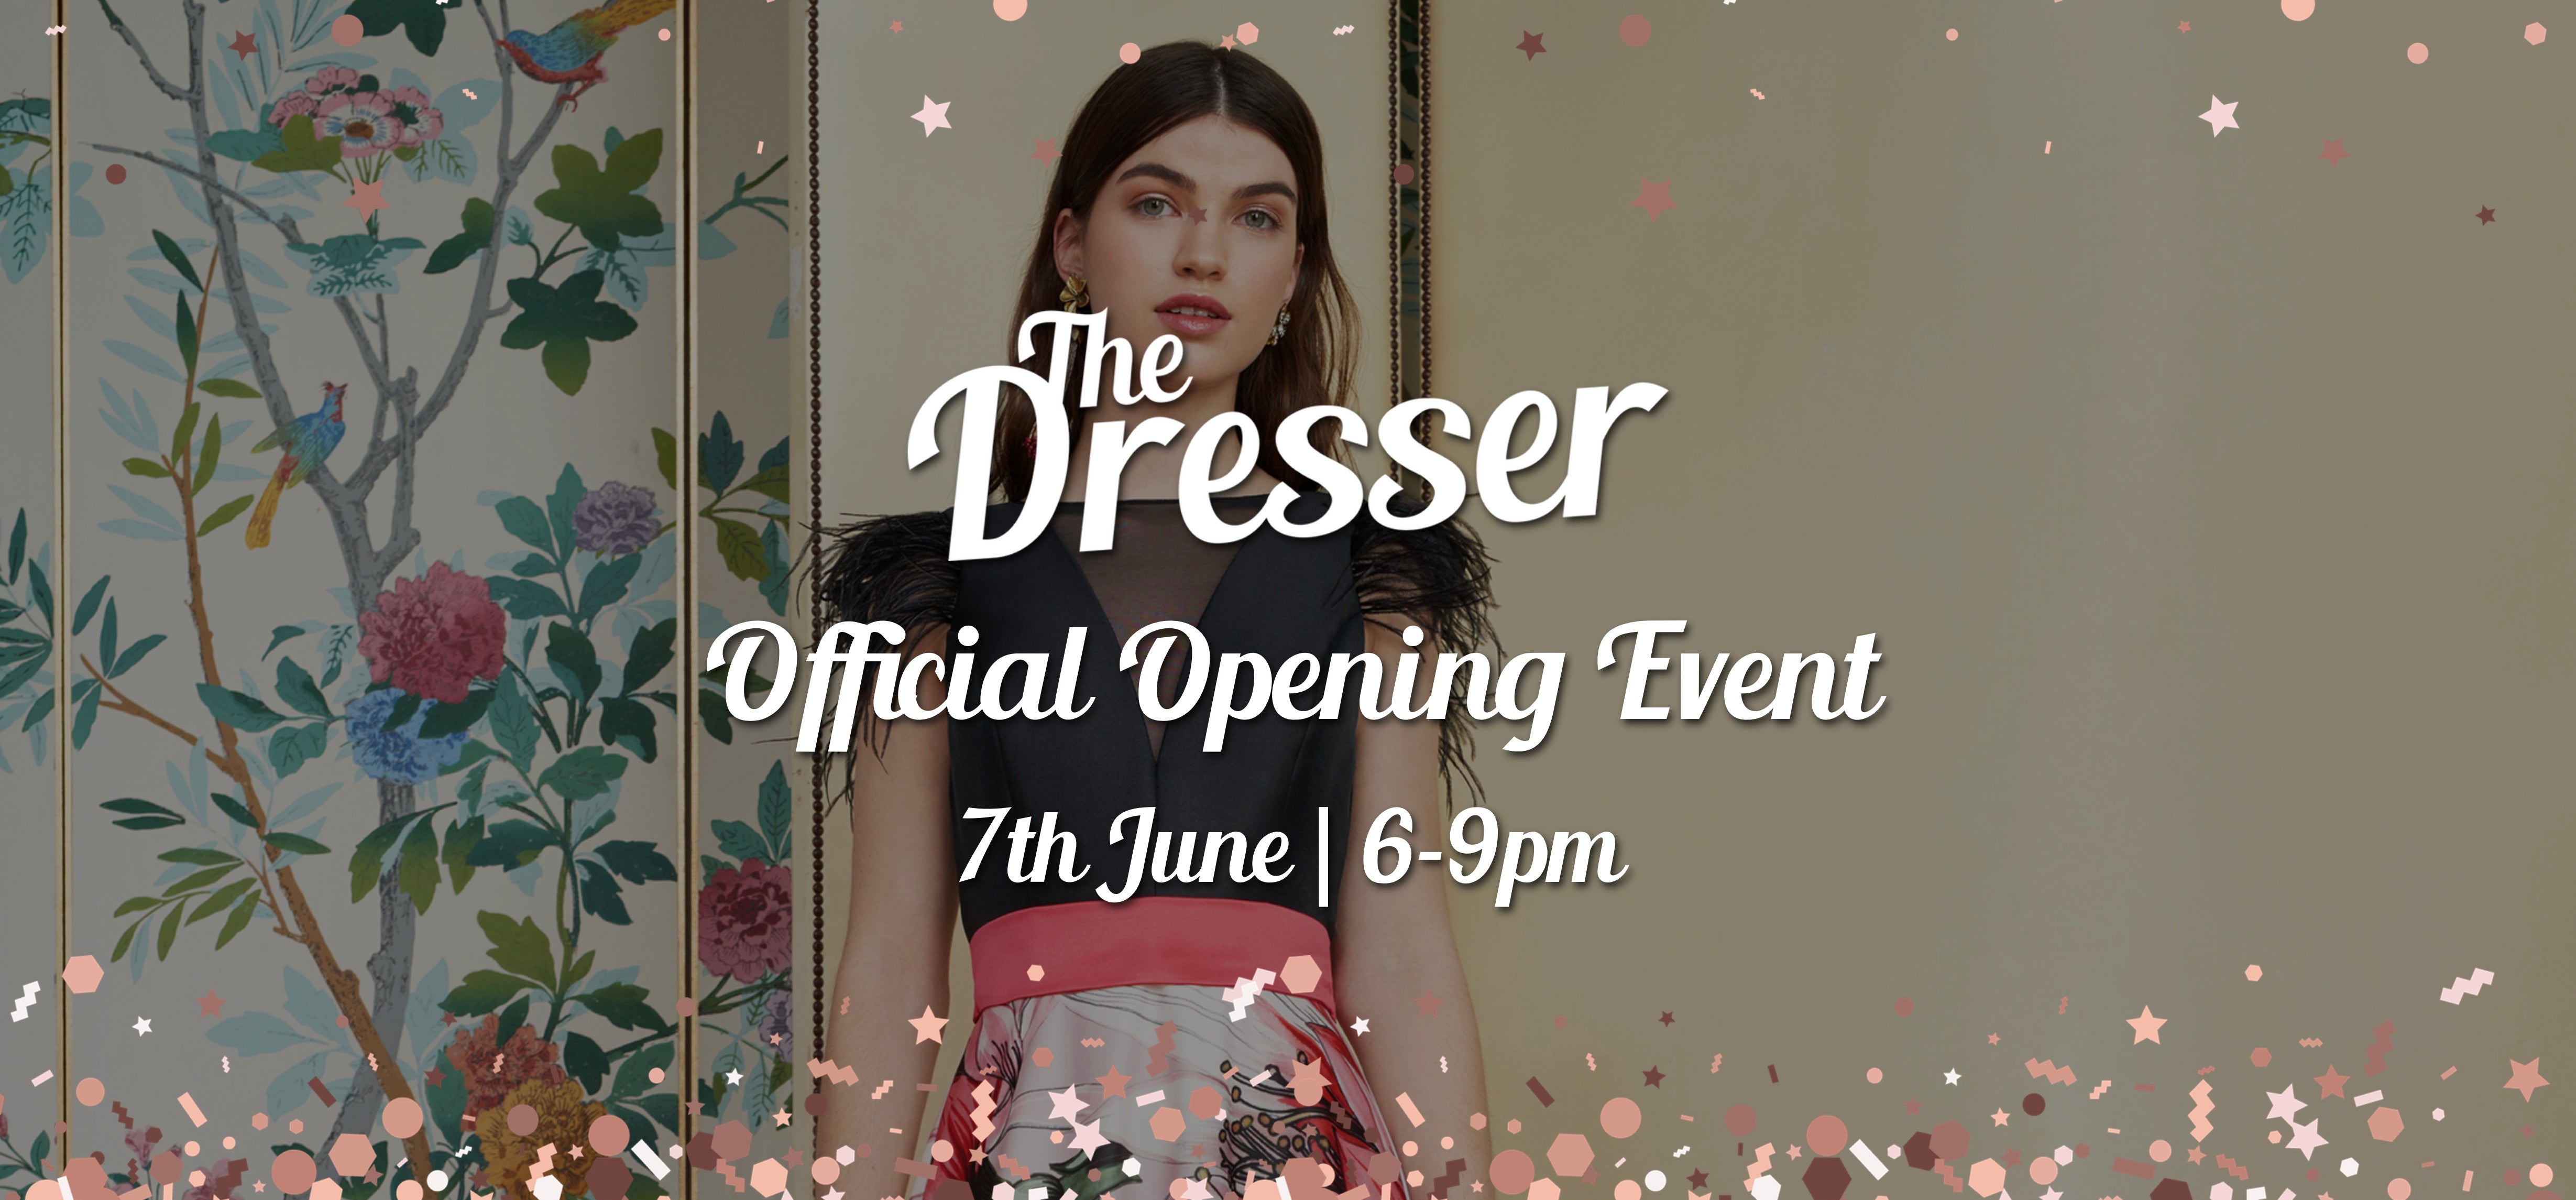 Official Opening Event | The Dresser Boutique Banbridge